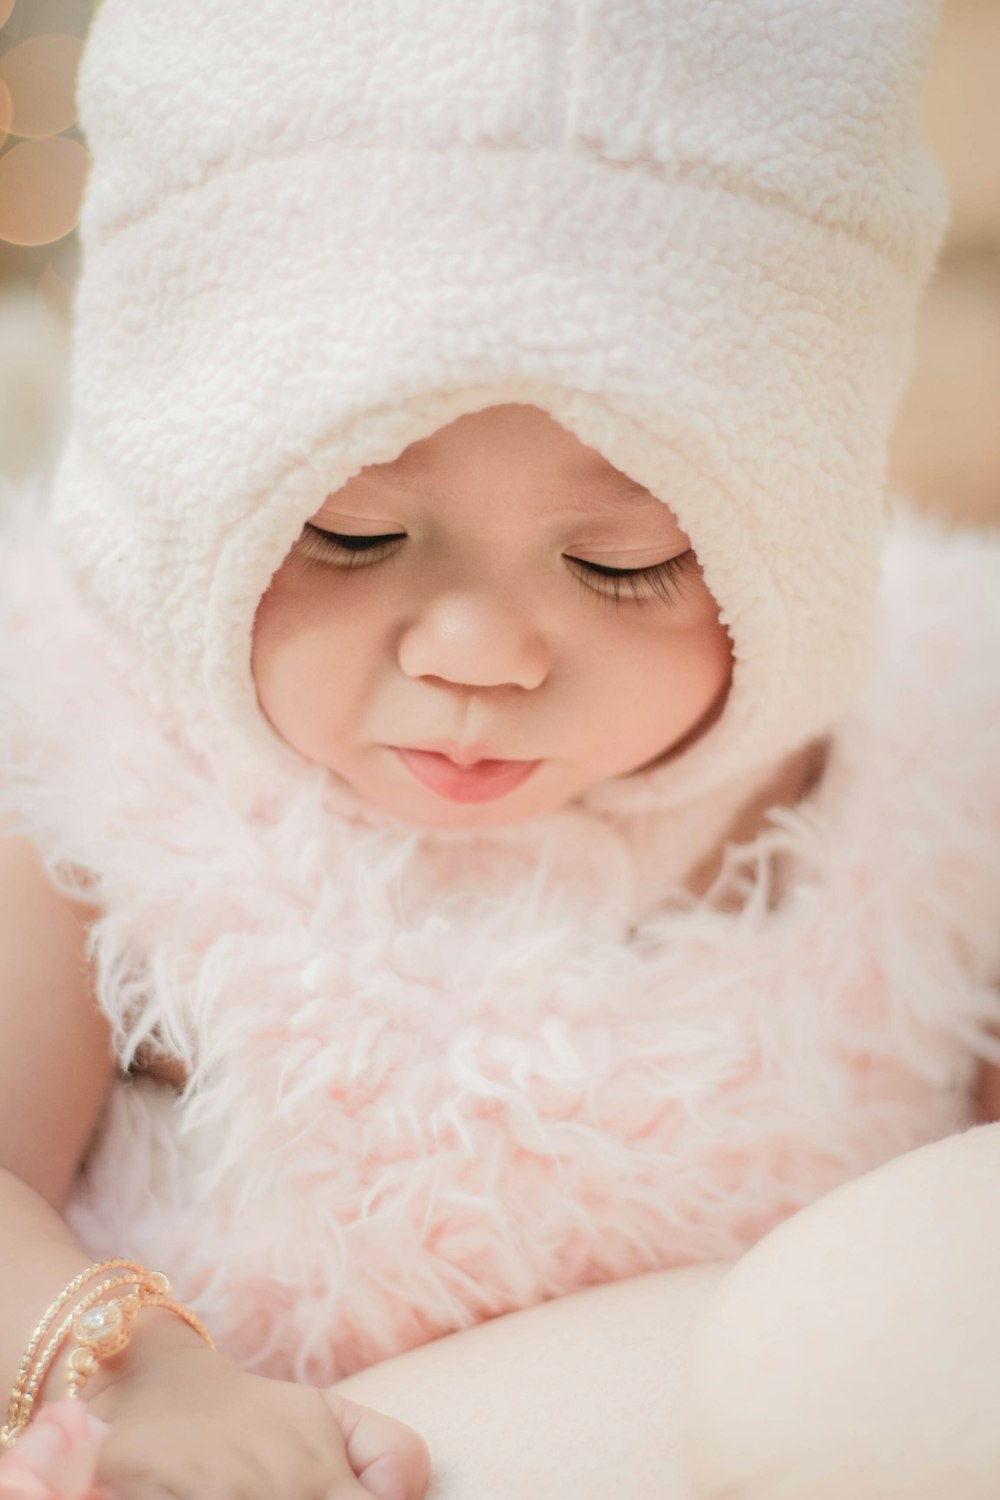 baby wearing white hat